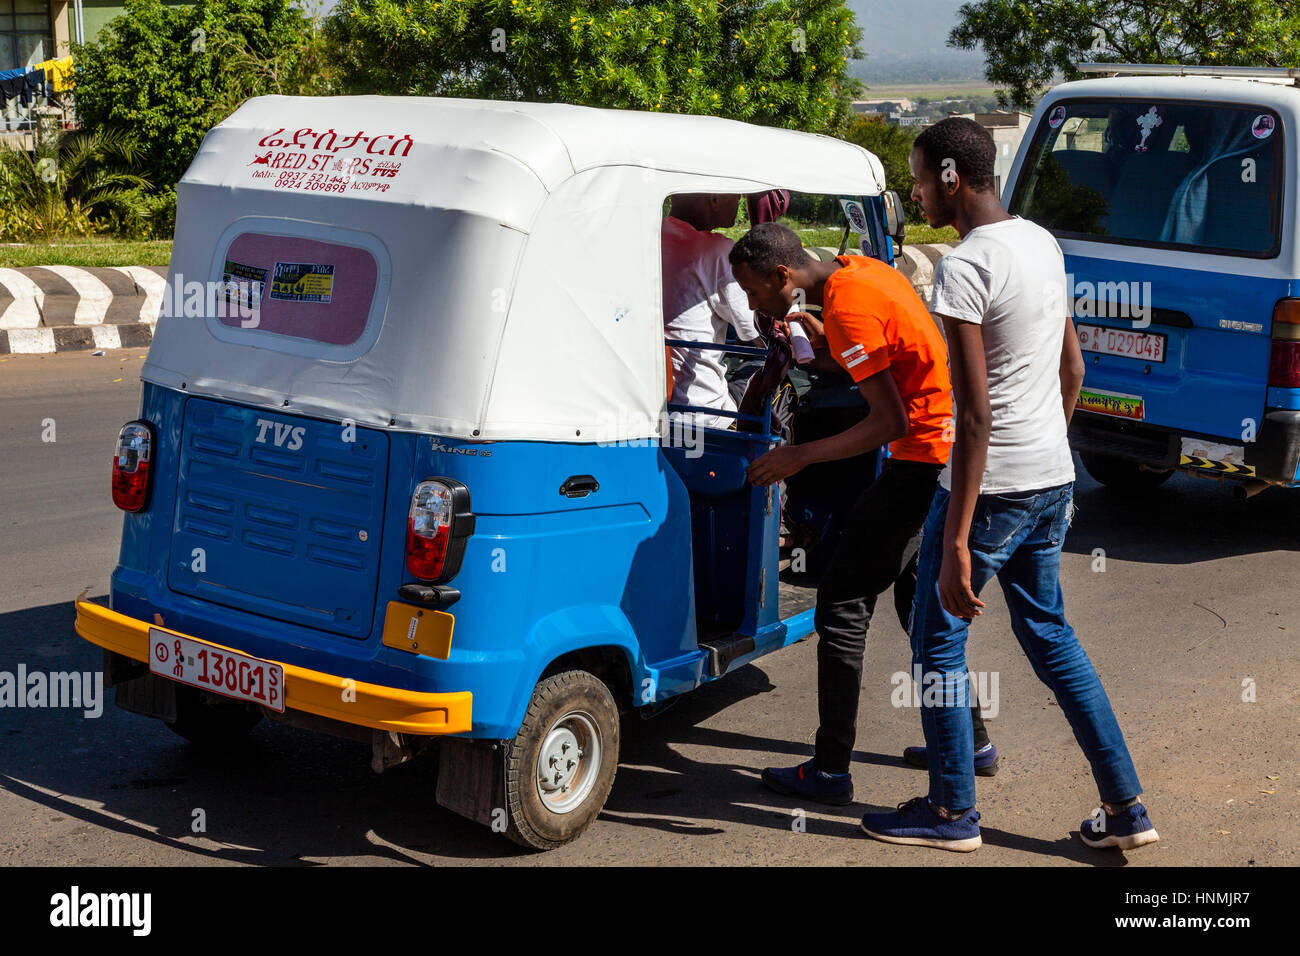 Two Men Getting Into A Bajaj Taxi, Arba Minch, Ethiopia Stock Photo